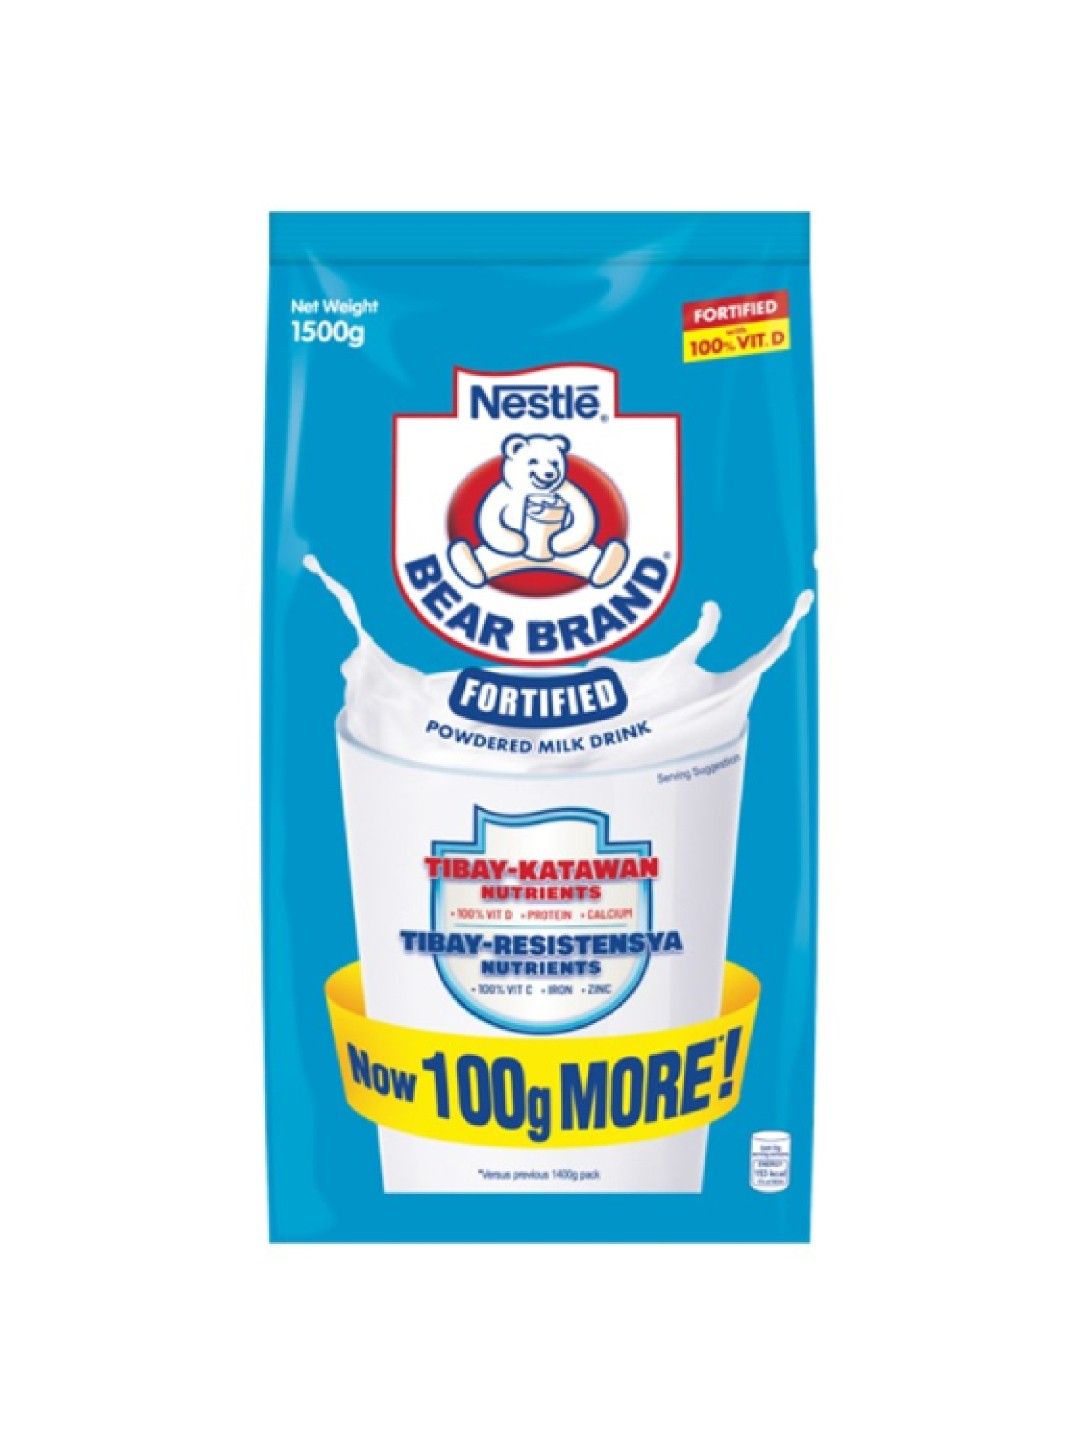 Bear Brand Fortified Powdered Milk Drink (1.5kg)